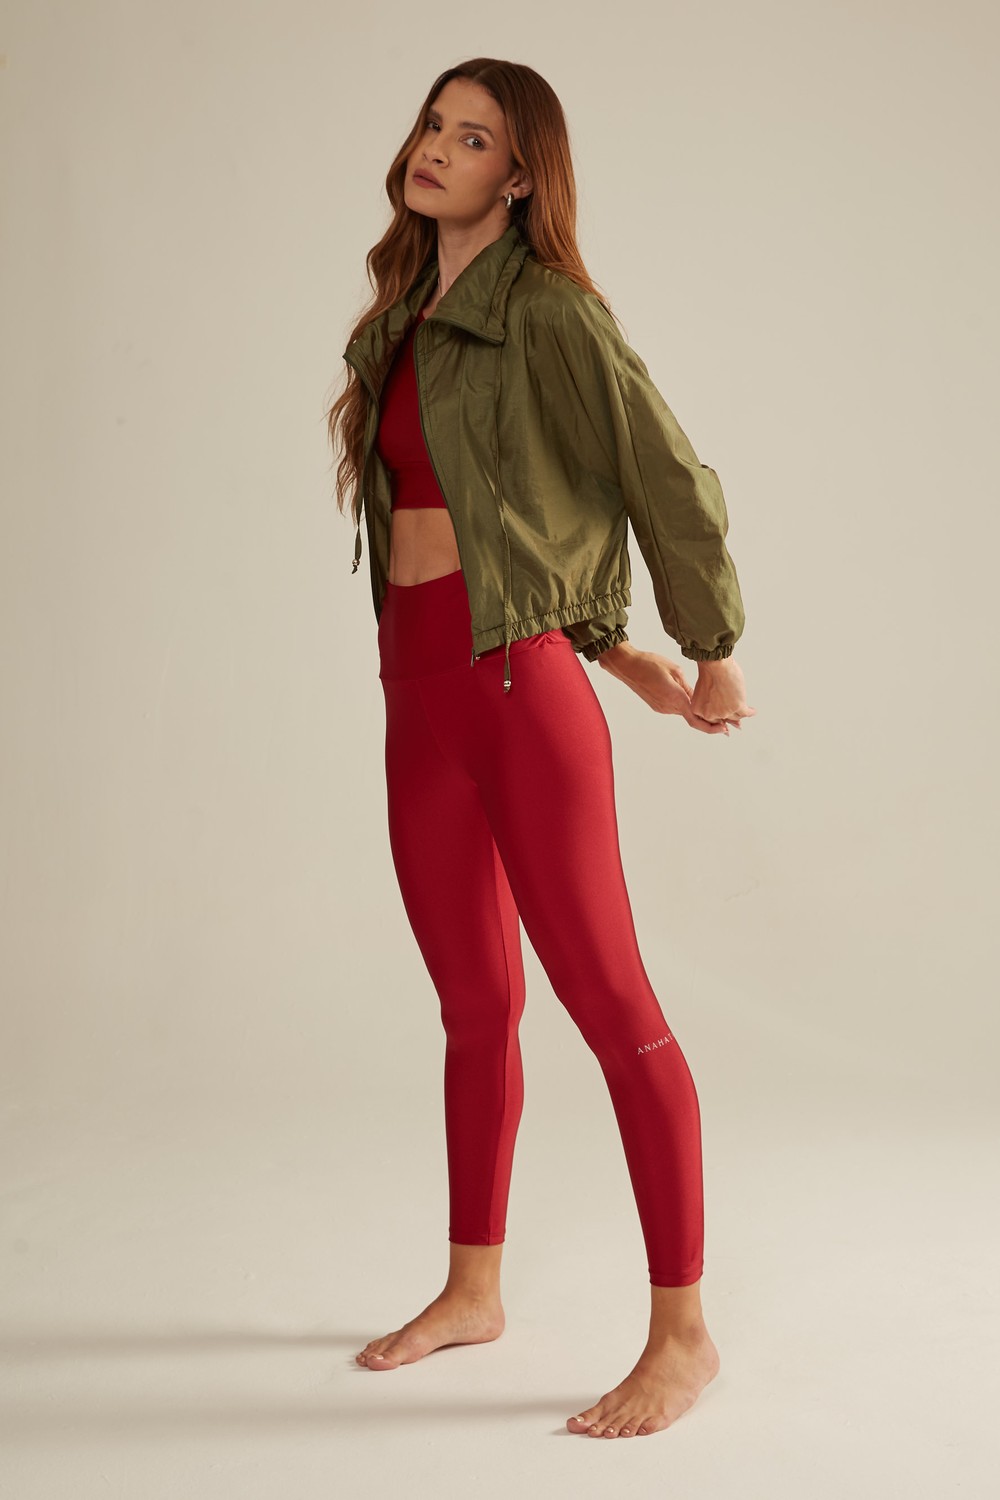 Legging glam red  glam legging - red - anahata fitwear